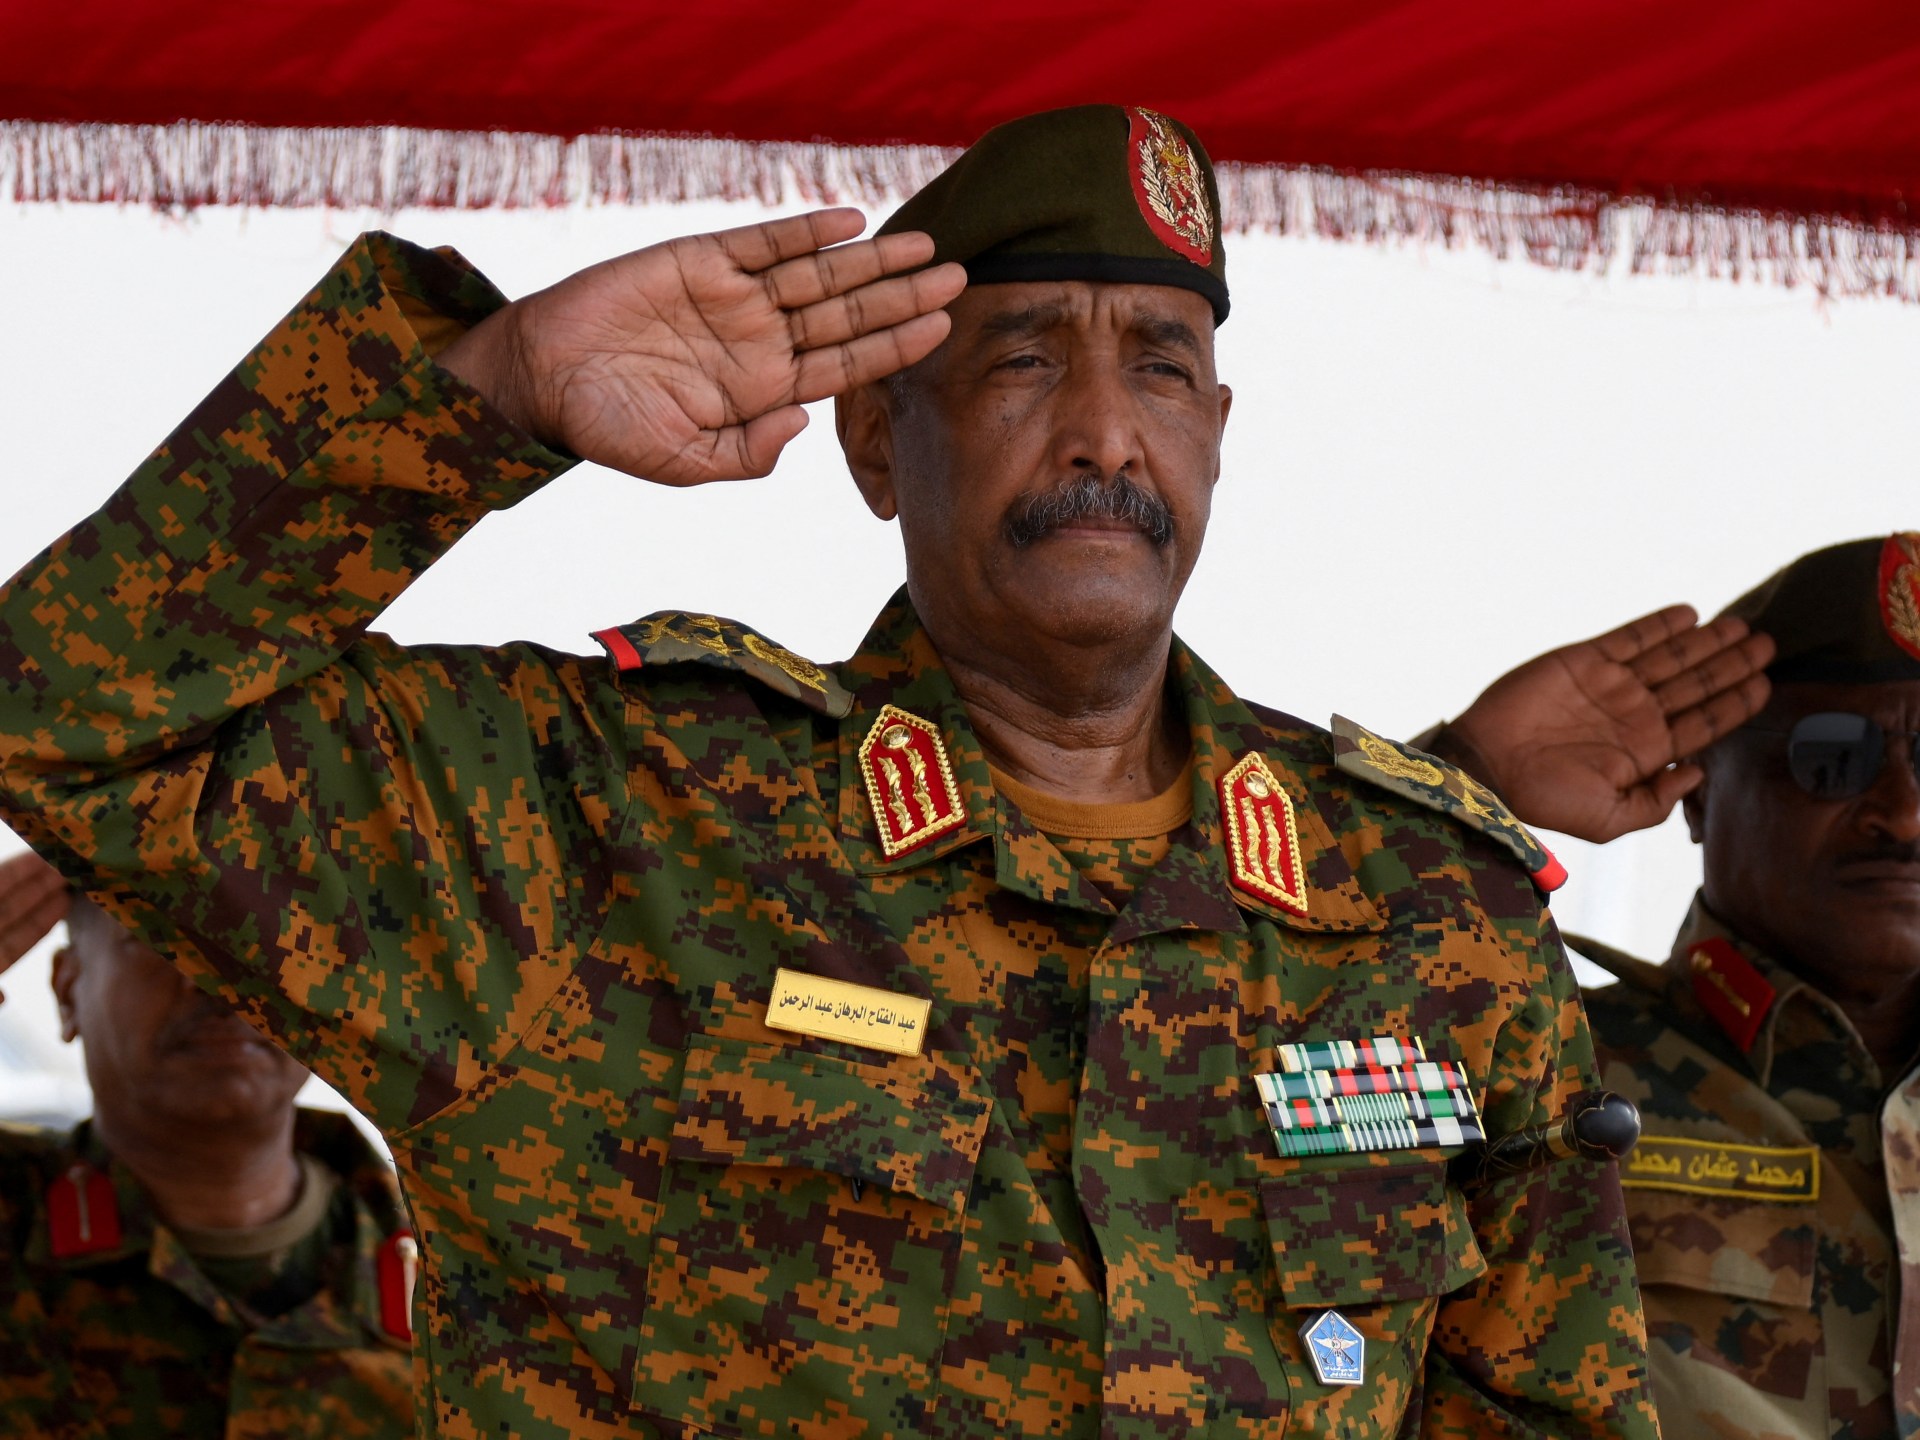 Sudan army chief: ‘Revolution can be restored’